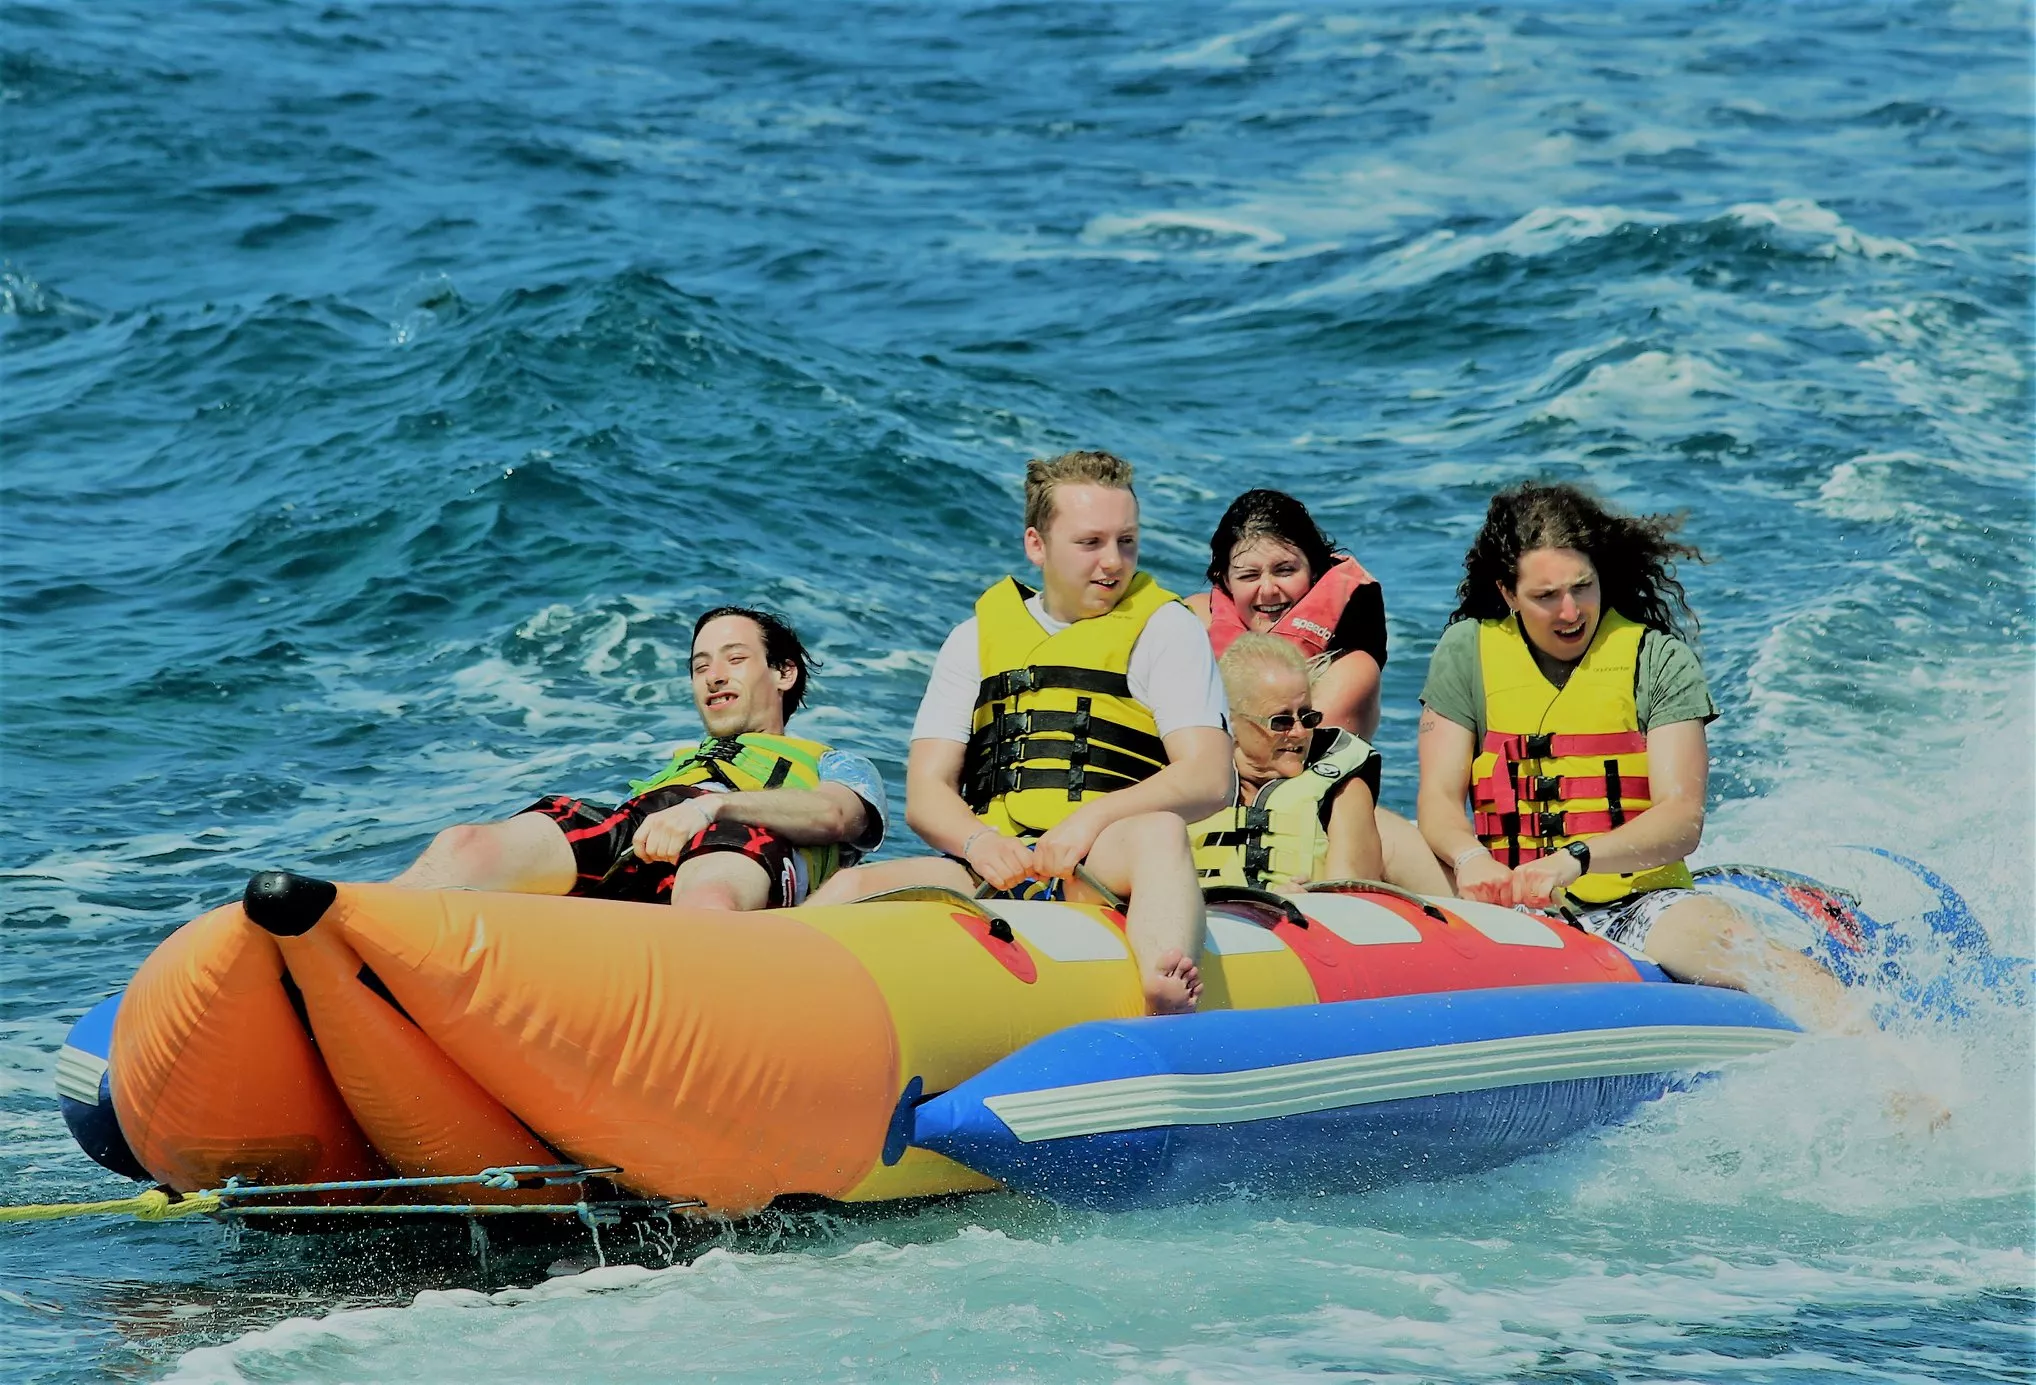 Lottie Watersports in Greece, Europe | Water Skiing,Jet Skiing,Speedboats - Rated 4.9